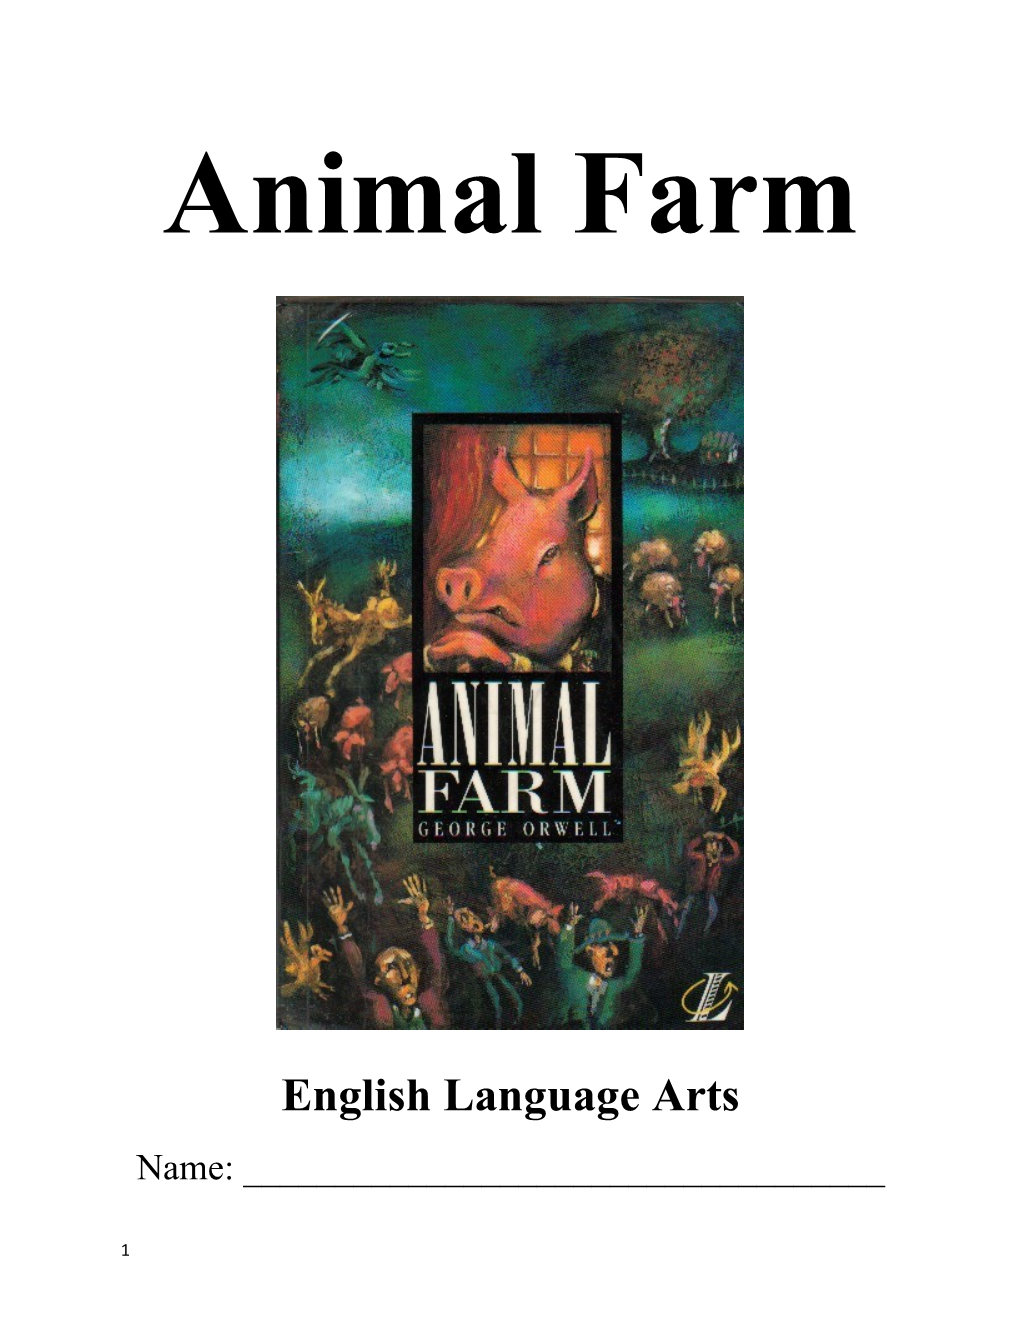 Animal Farm Reading Schedule